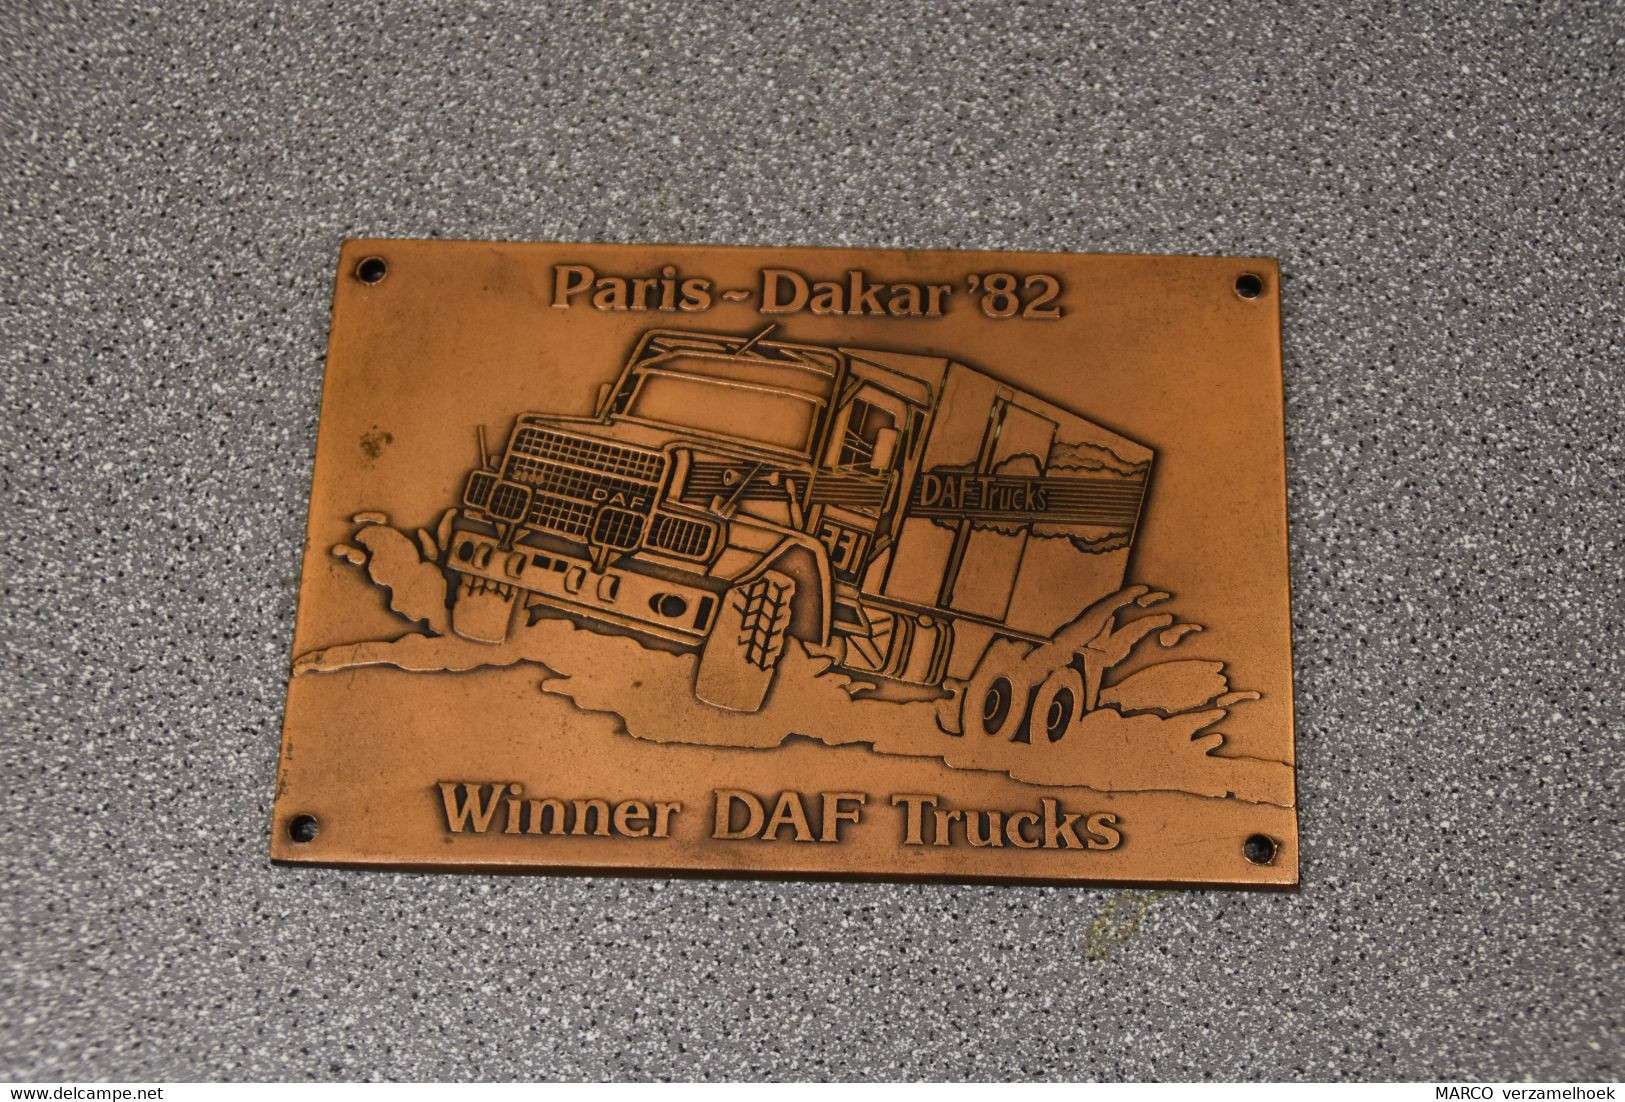 Truck-camion DAF Trucks Eindhoven (NL) Paris-dakar 1982 Plaquette Brons Winner DAF Trucks - Camions